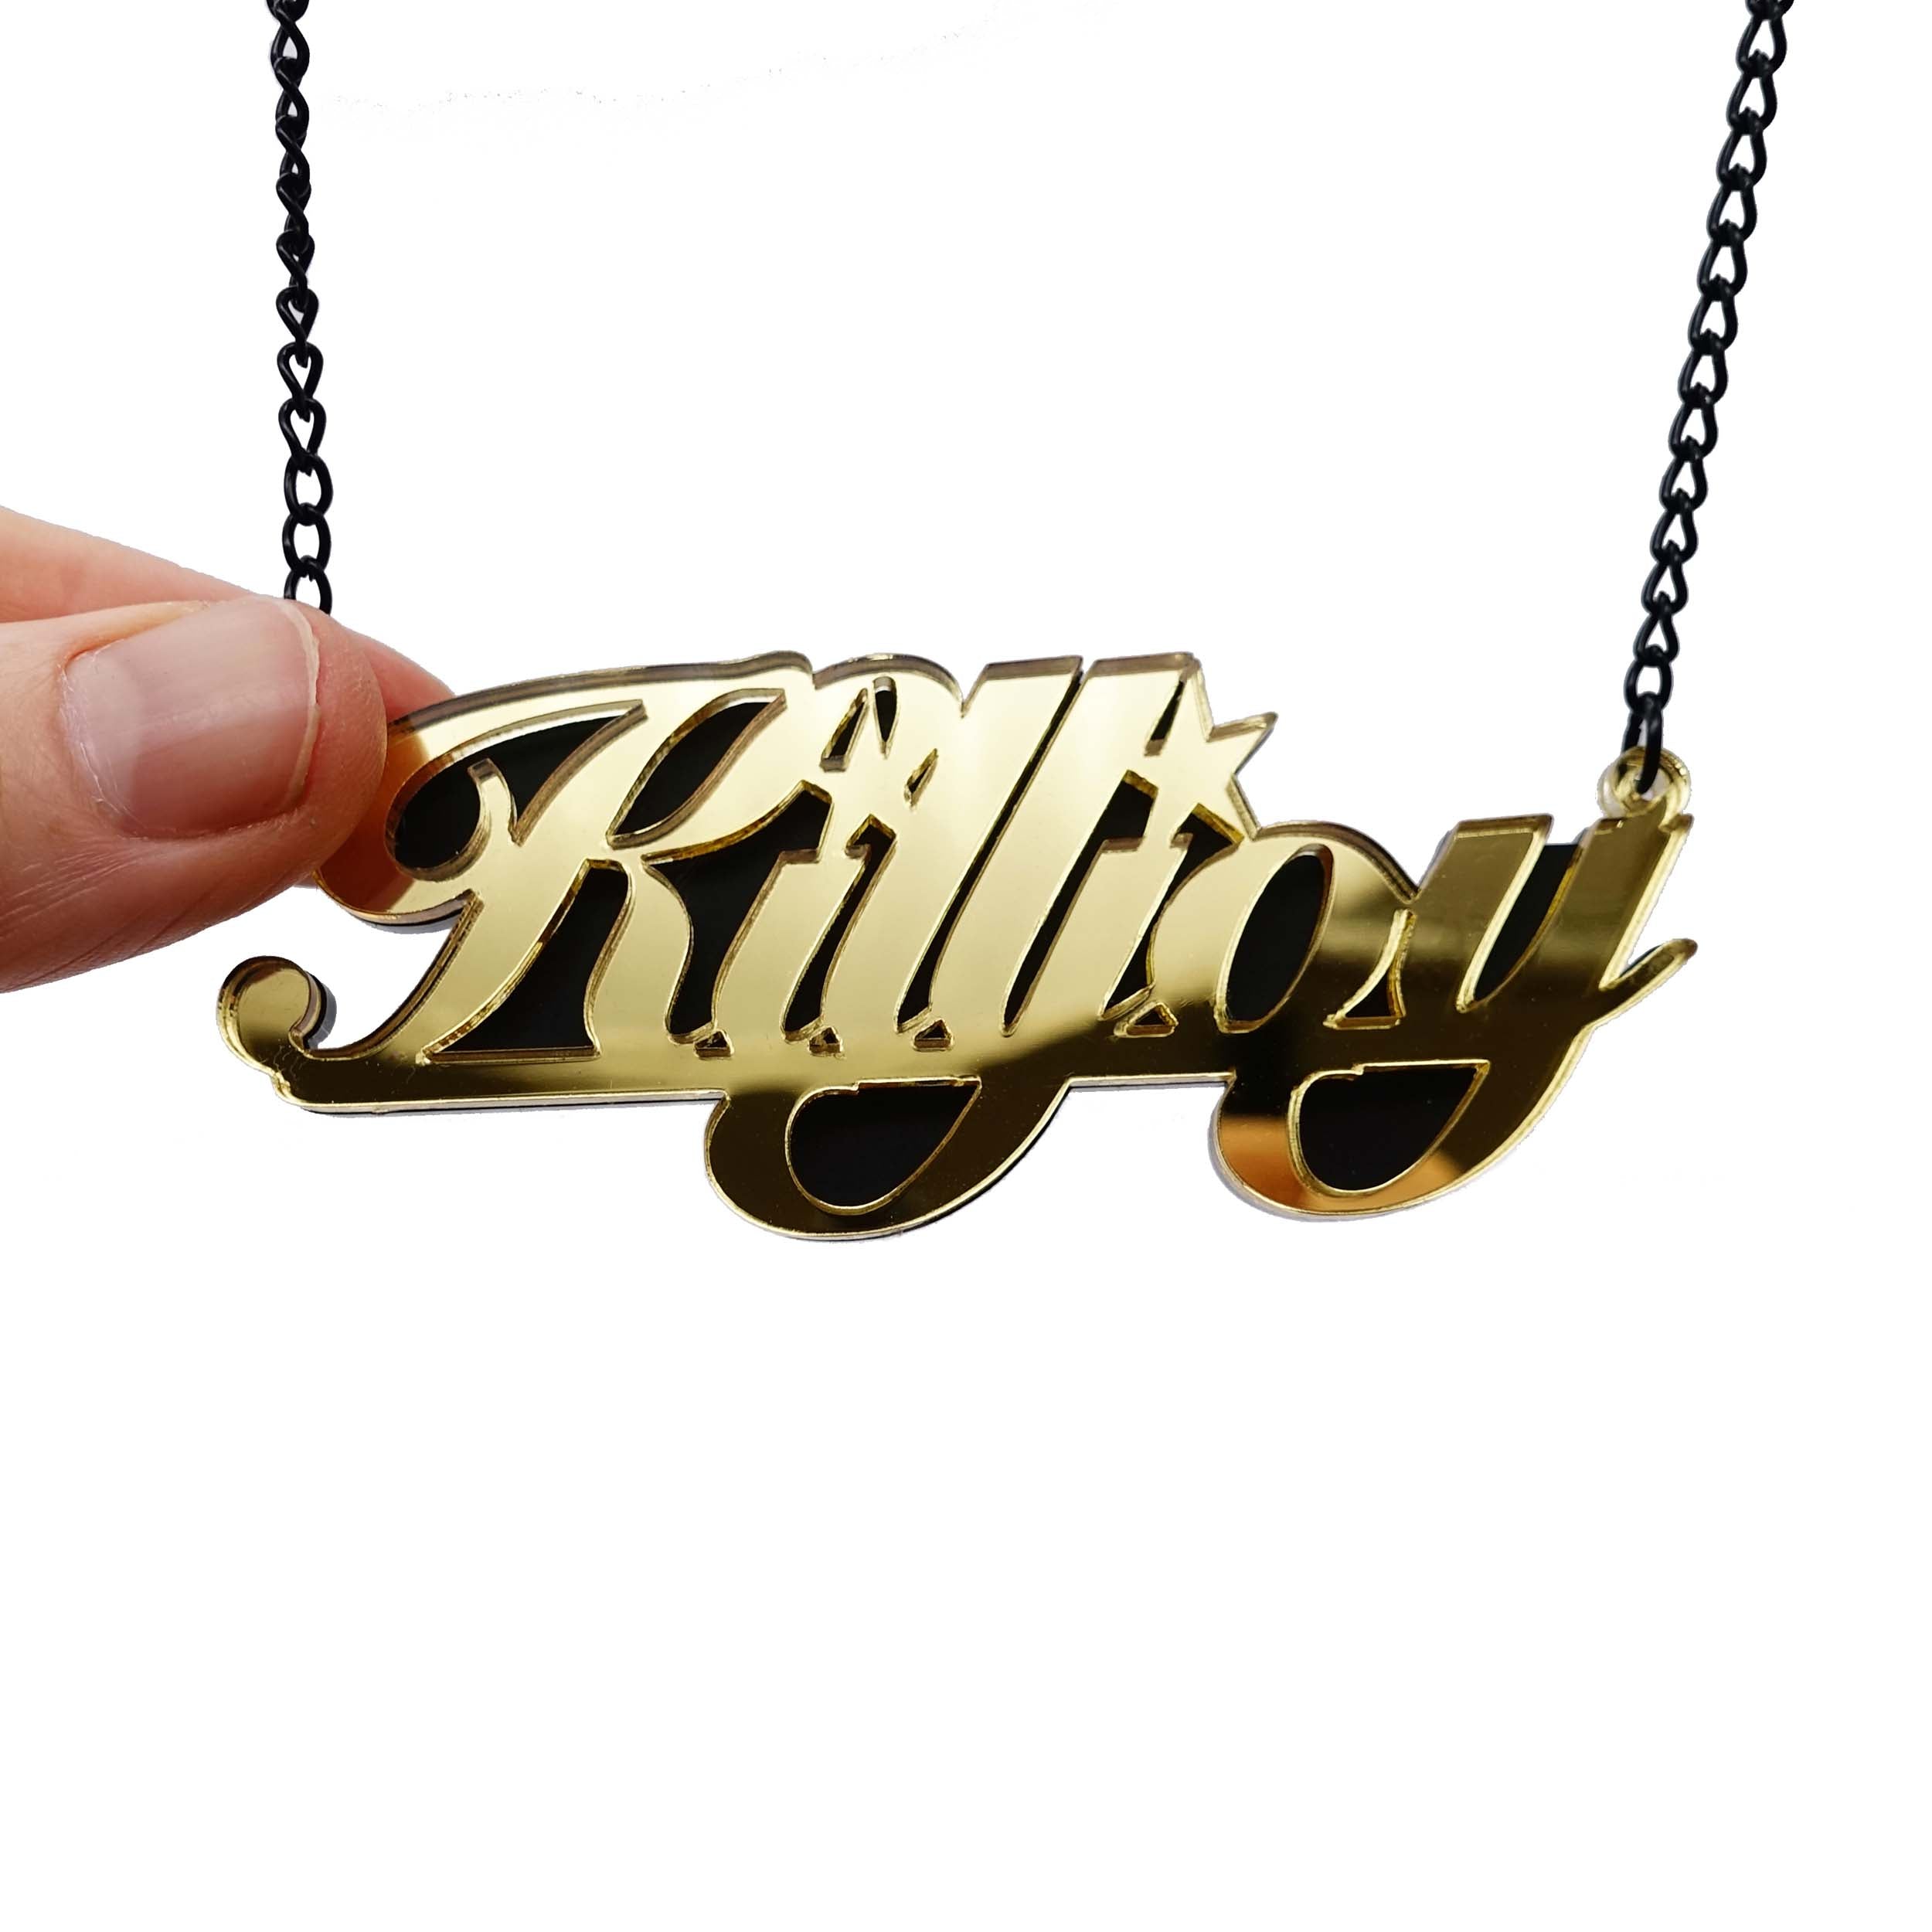 Gold mirror killjoy necklace shown hanging